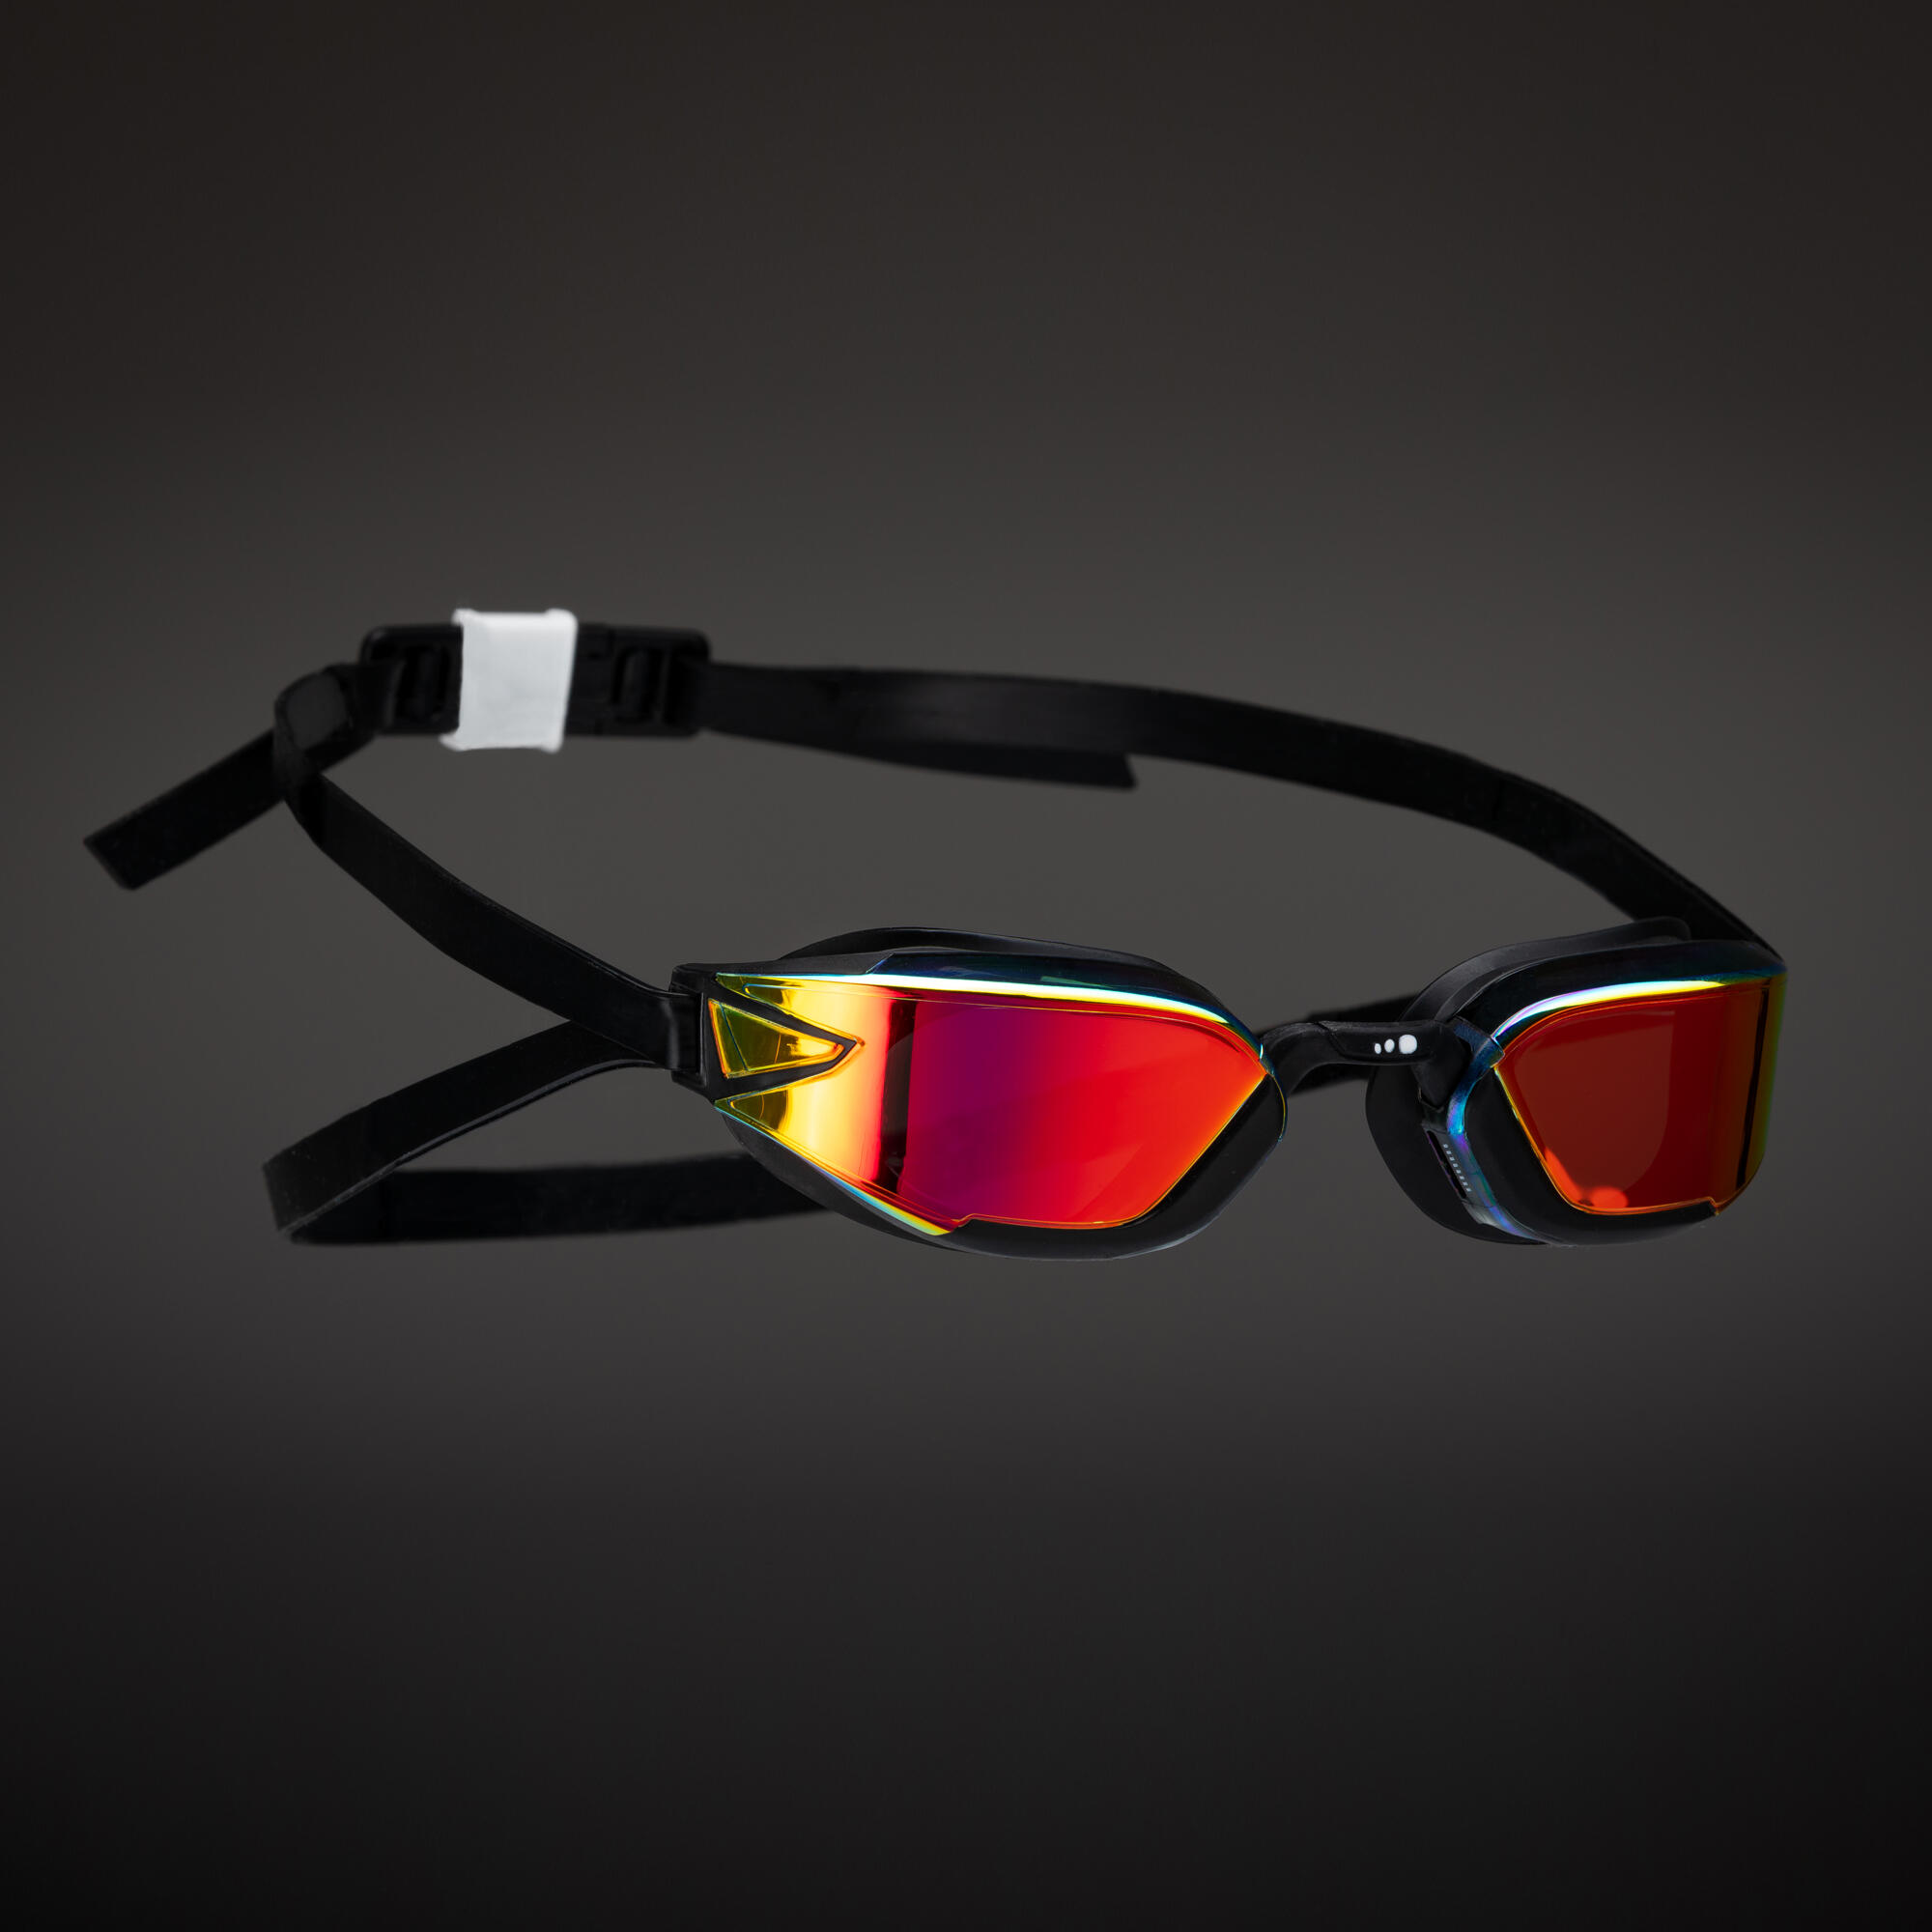 NABAIJI BFAST swimming goggles - Mirrored lenses - Single size - Black red